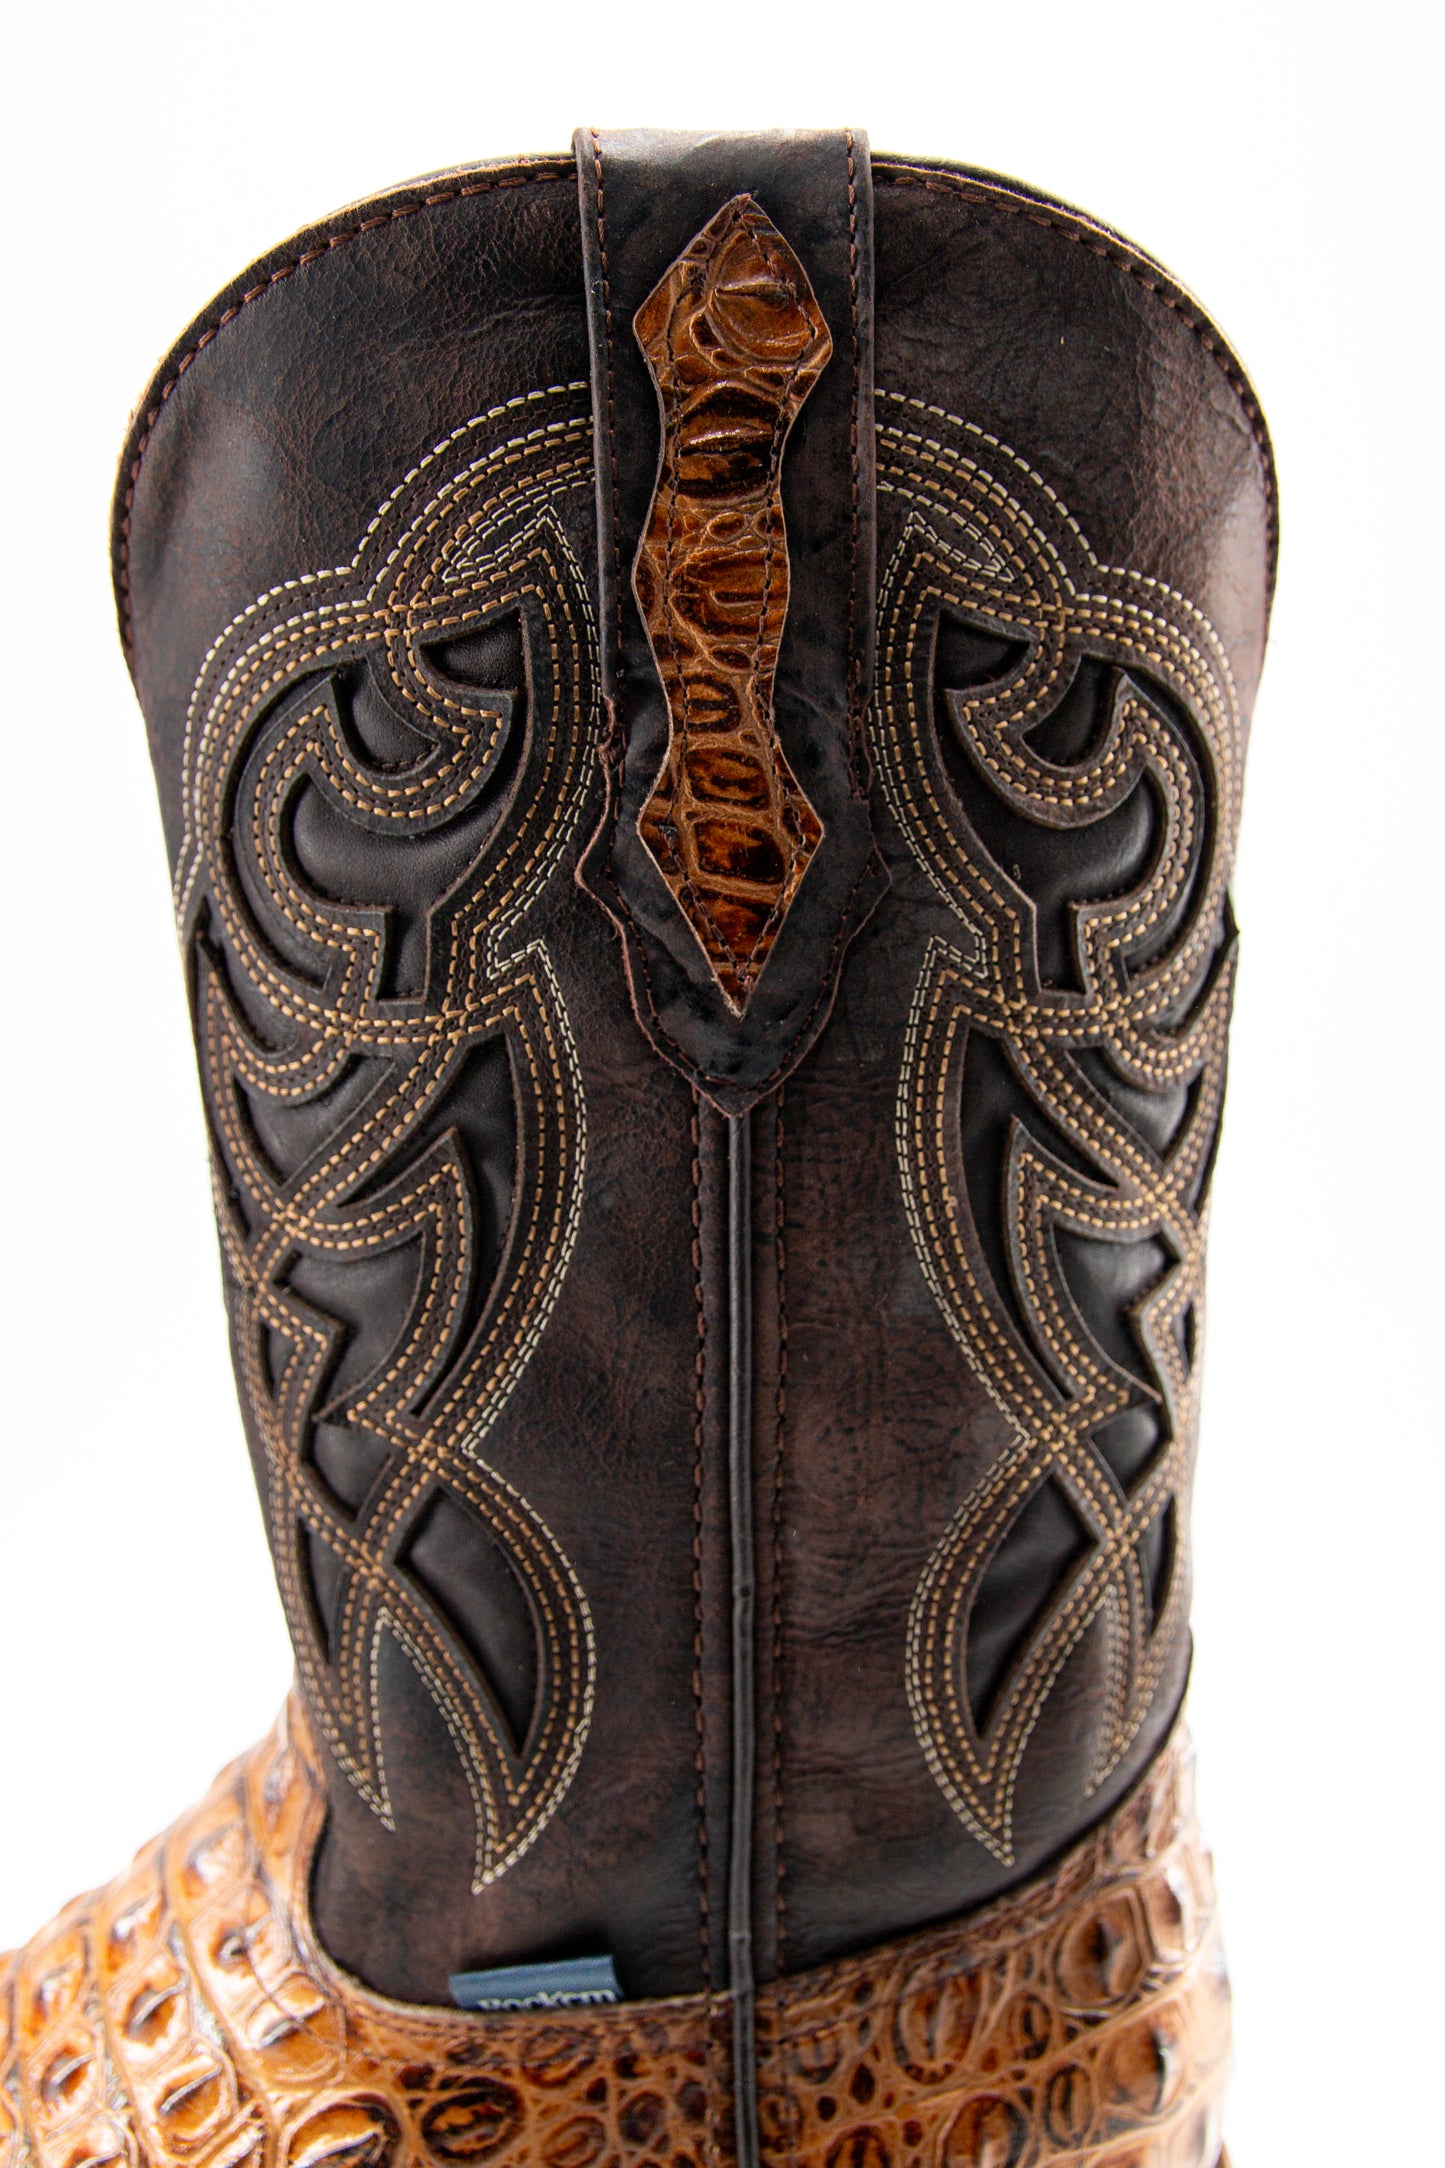 The Nilo Lomo Print Cowboy Boot